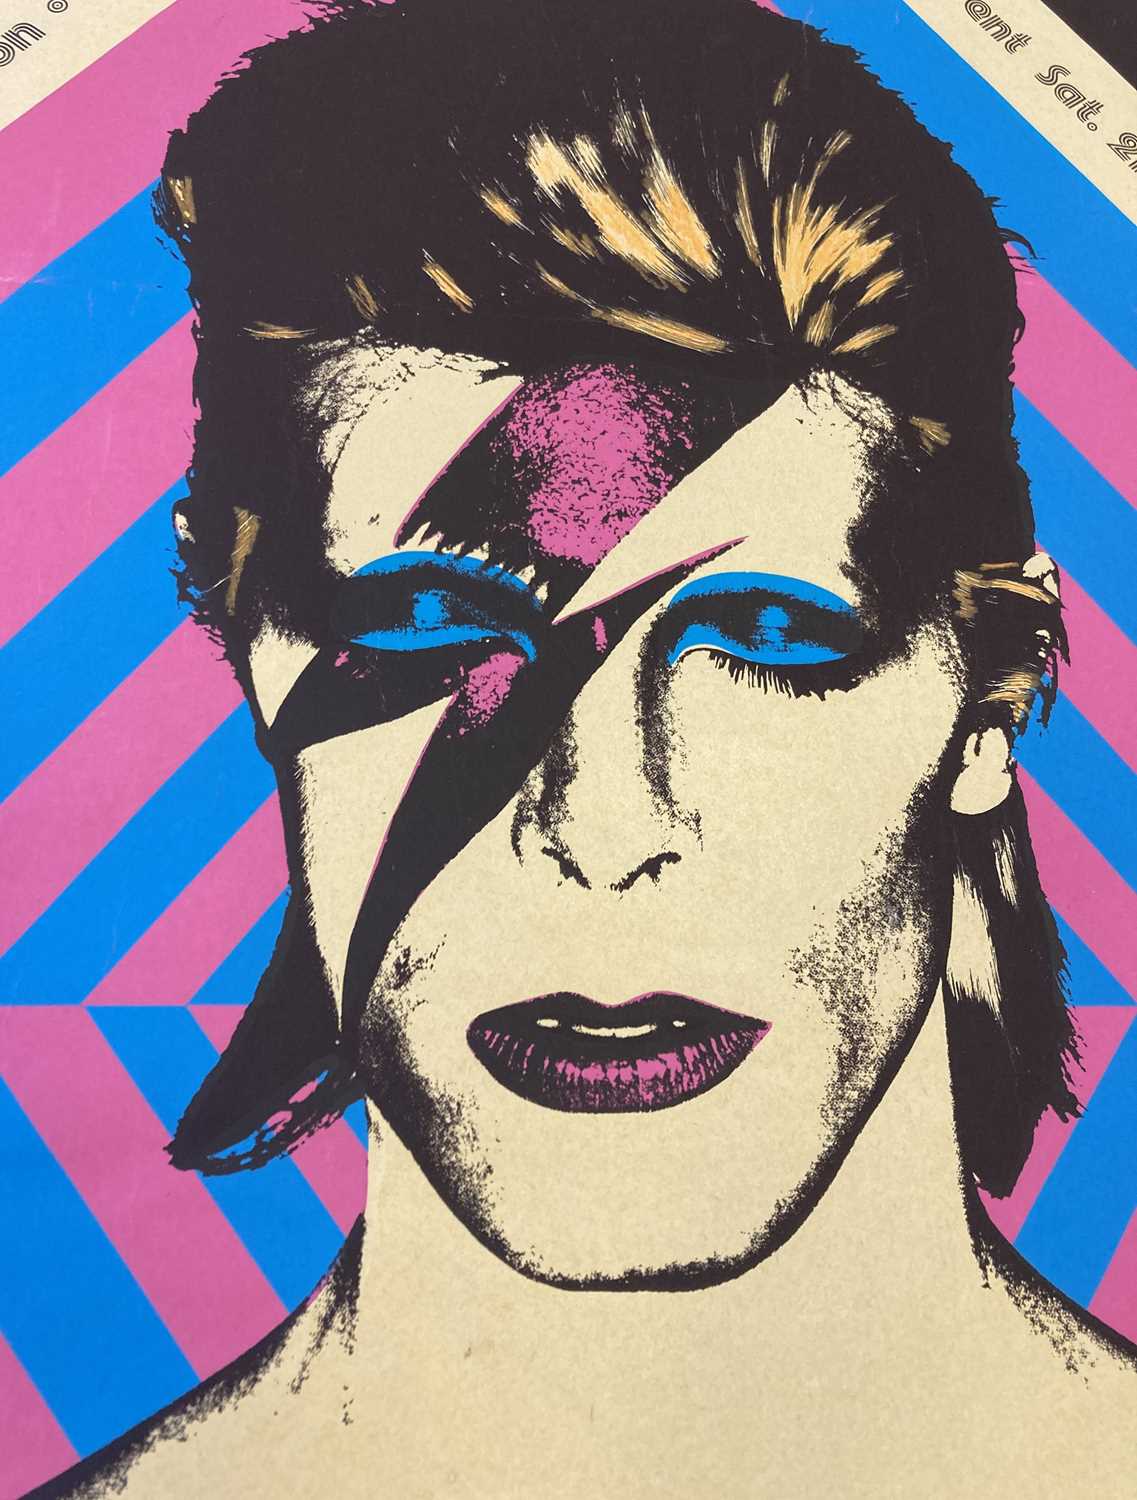 Lot 415 1973 David Bowie Ziggy Stardust Poster 1526